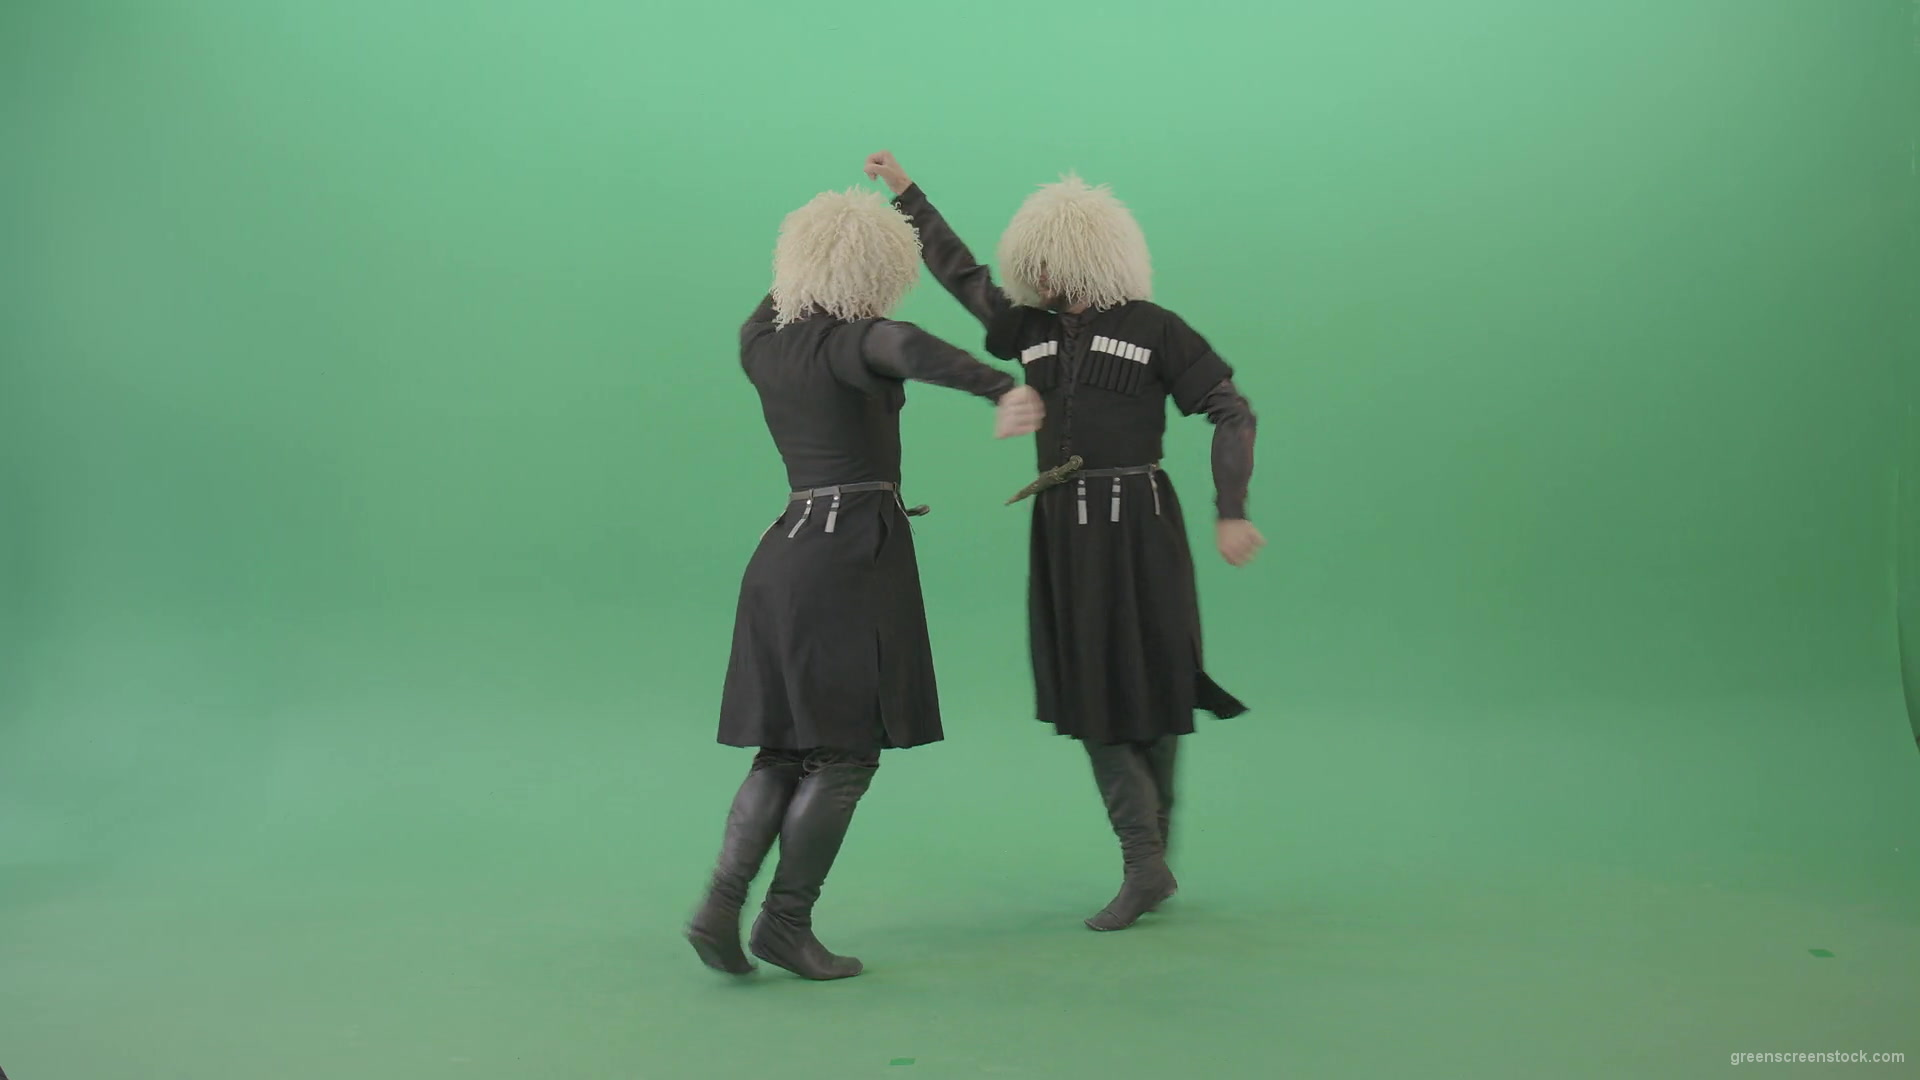 Two-man-dancing-Khorumi-folk-georgian-dance-isolated-on-Green-Screen-4K-Video-Footage-1920_009 Green Screen Stock